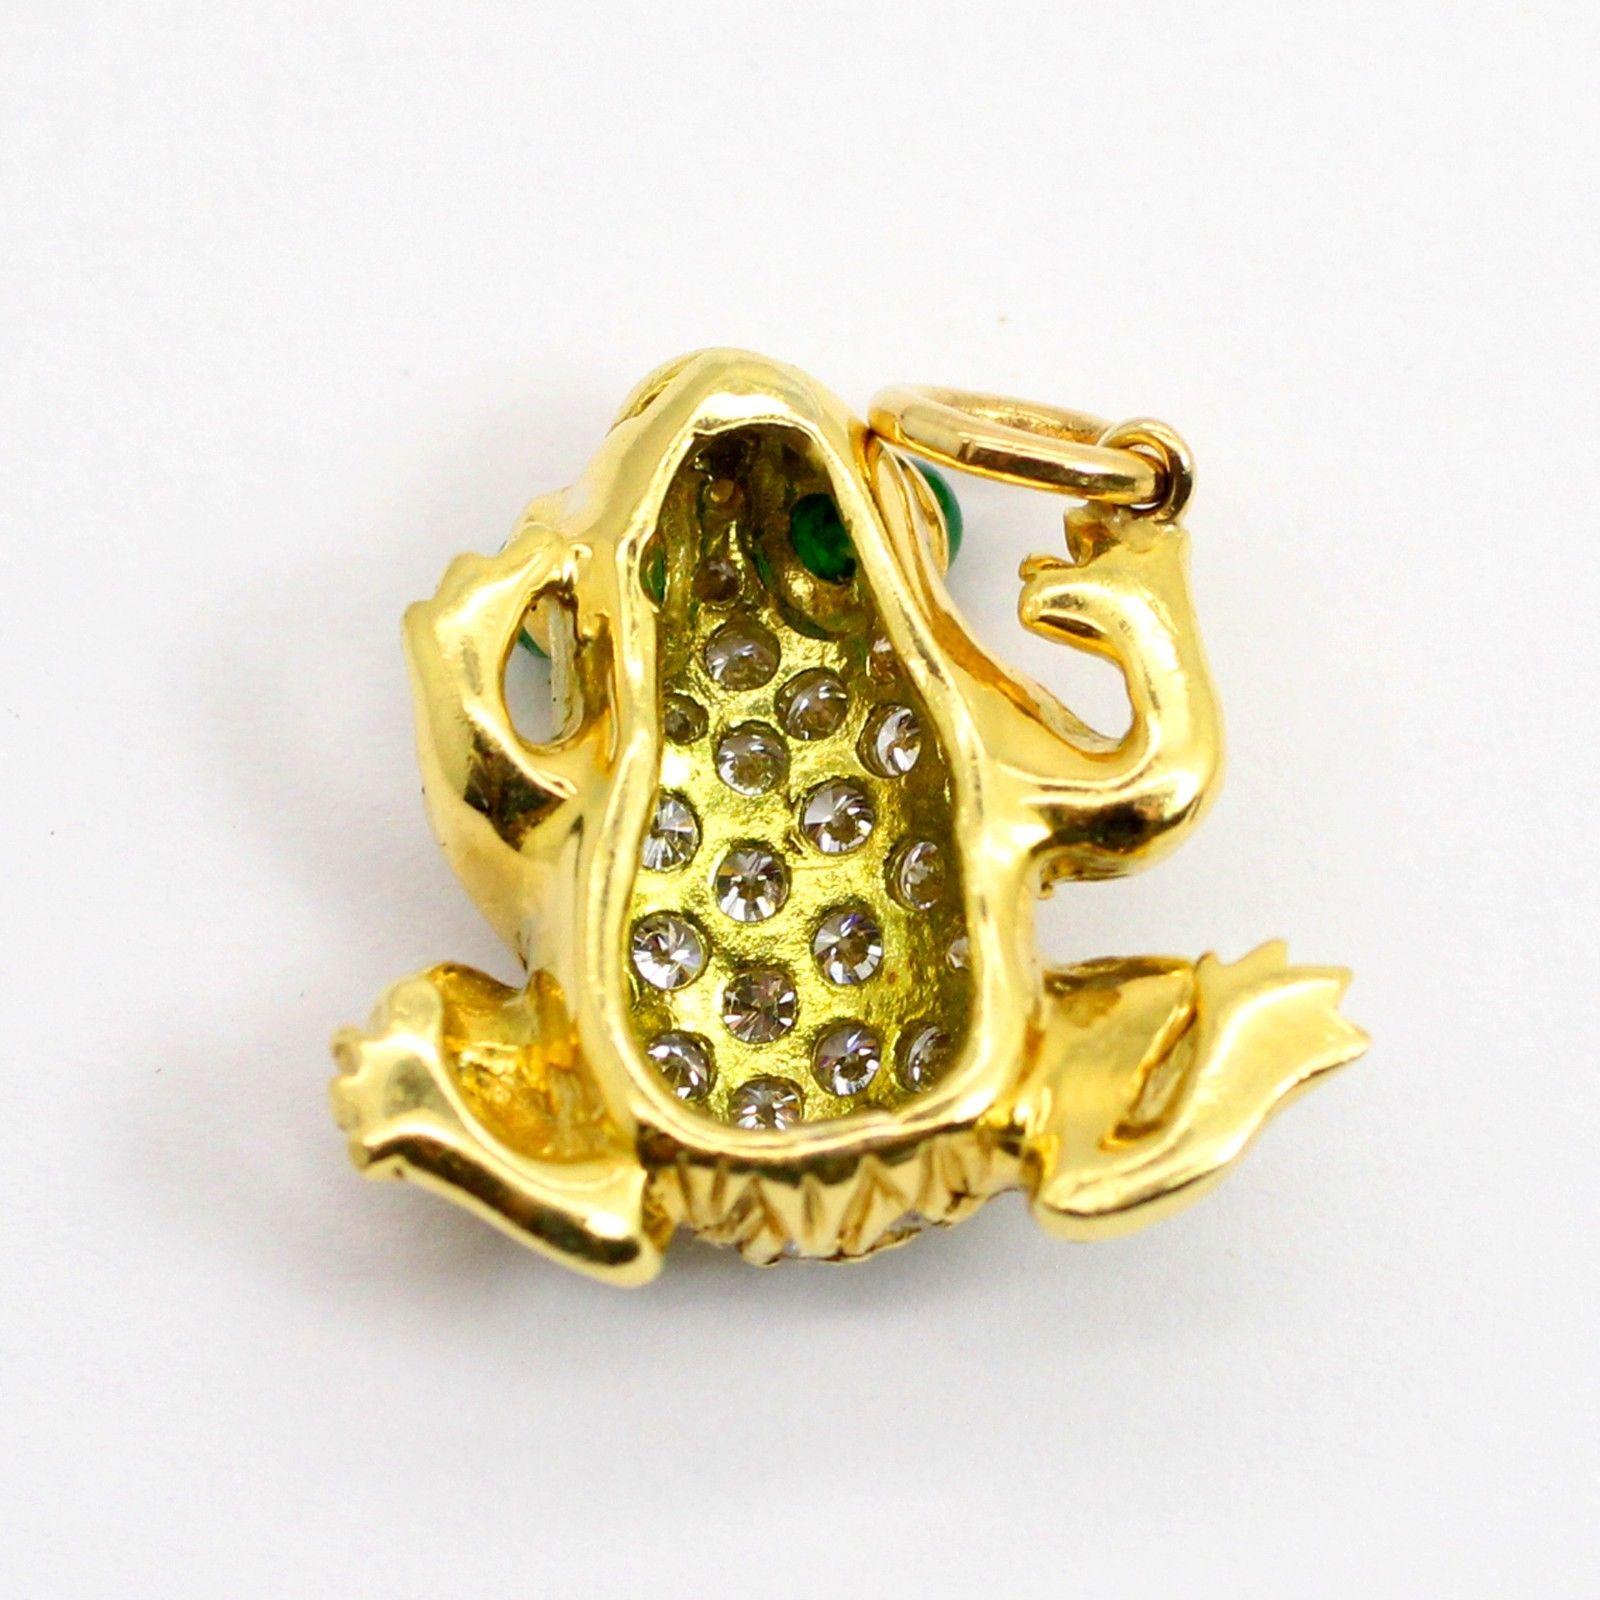 gold frog pendant